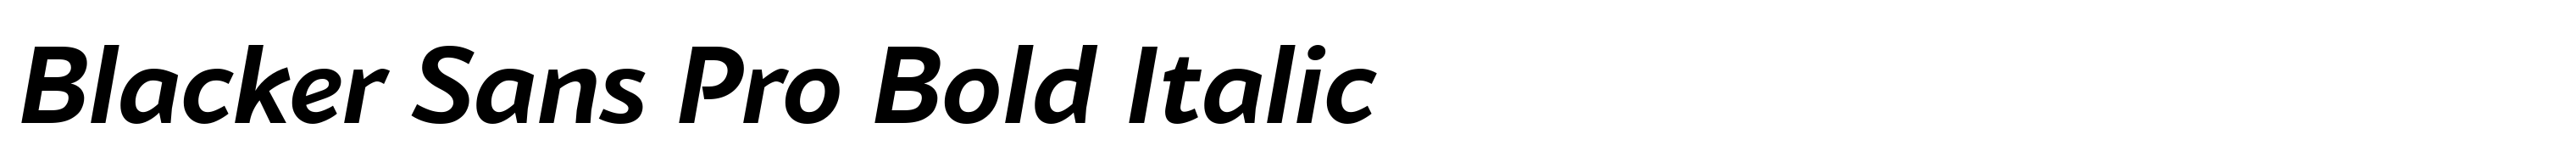 Blacker Sans Pro Bold Italic